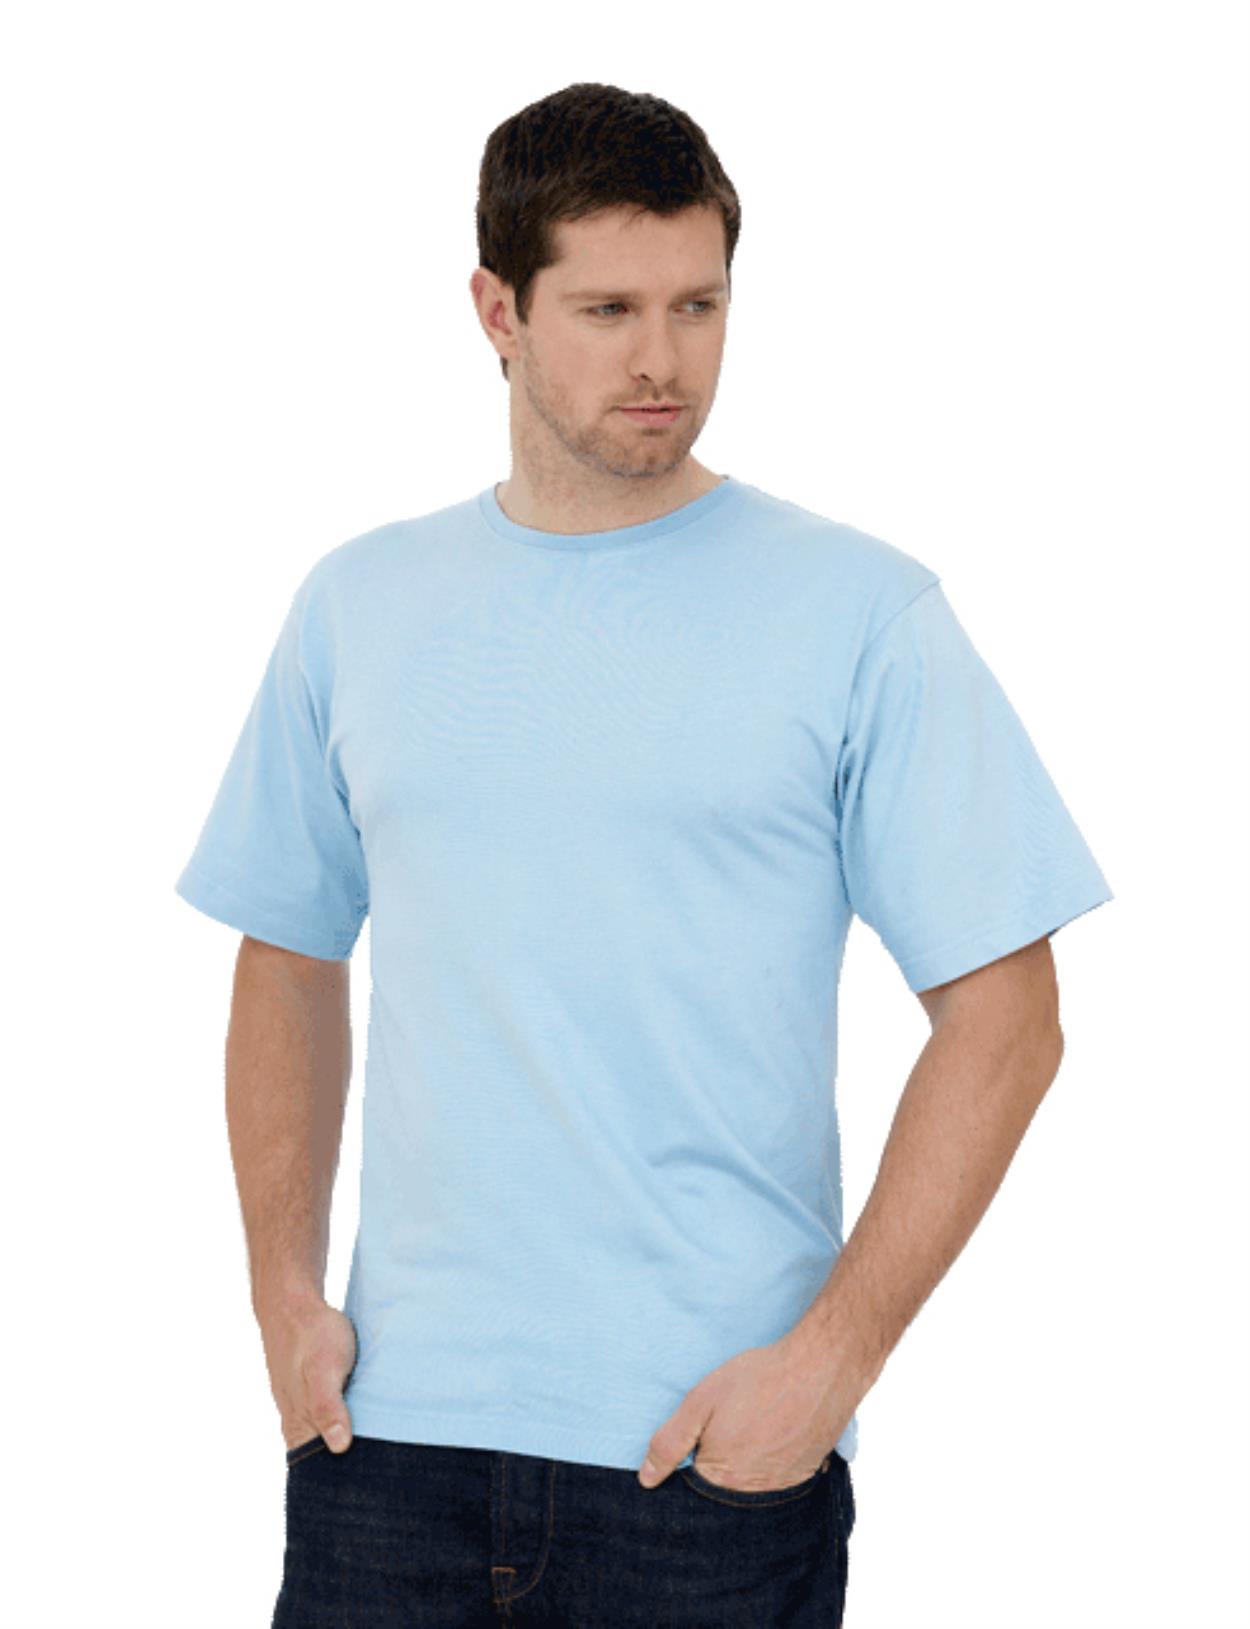 UC301 Workwear T shirt main image